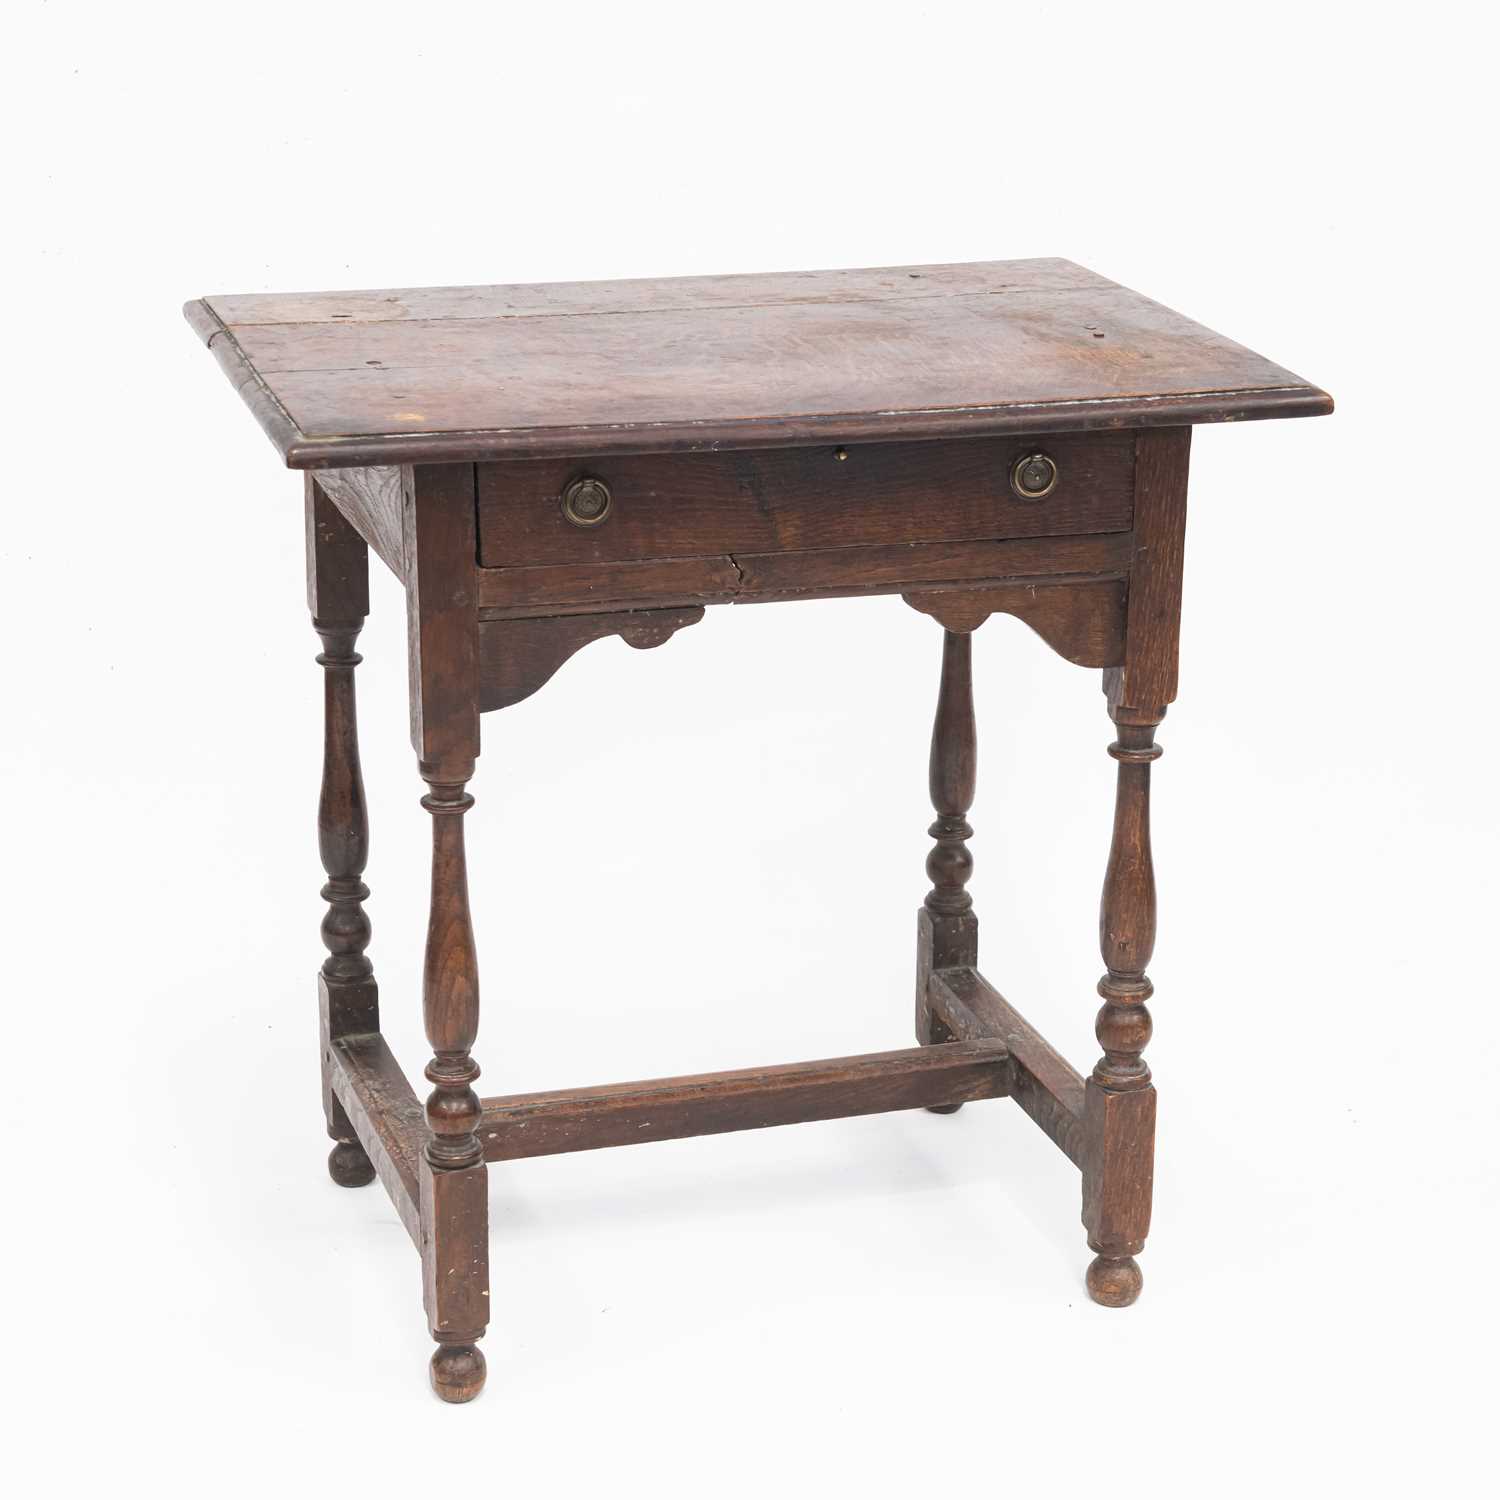 AN OAK SIDE TABLE, CIRCA 1700